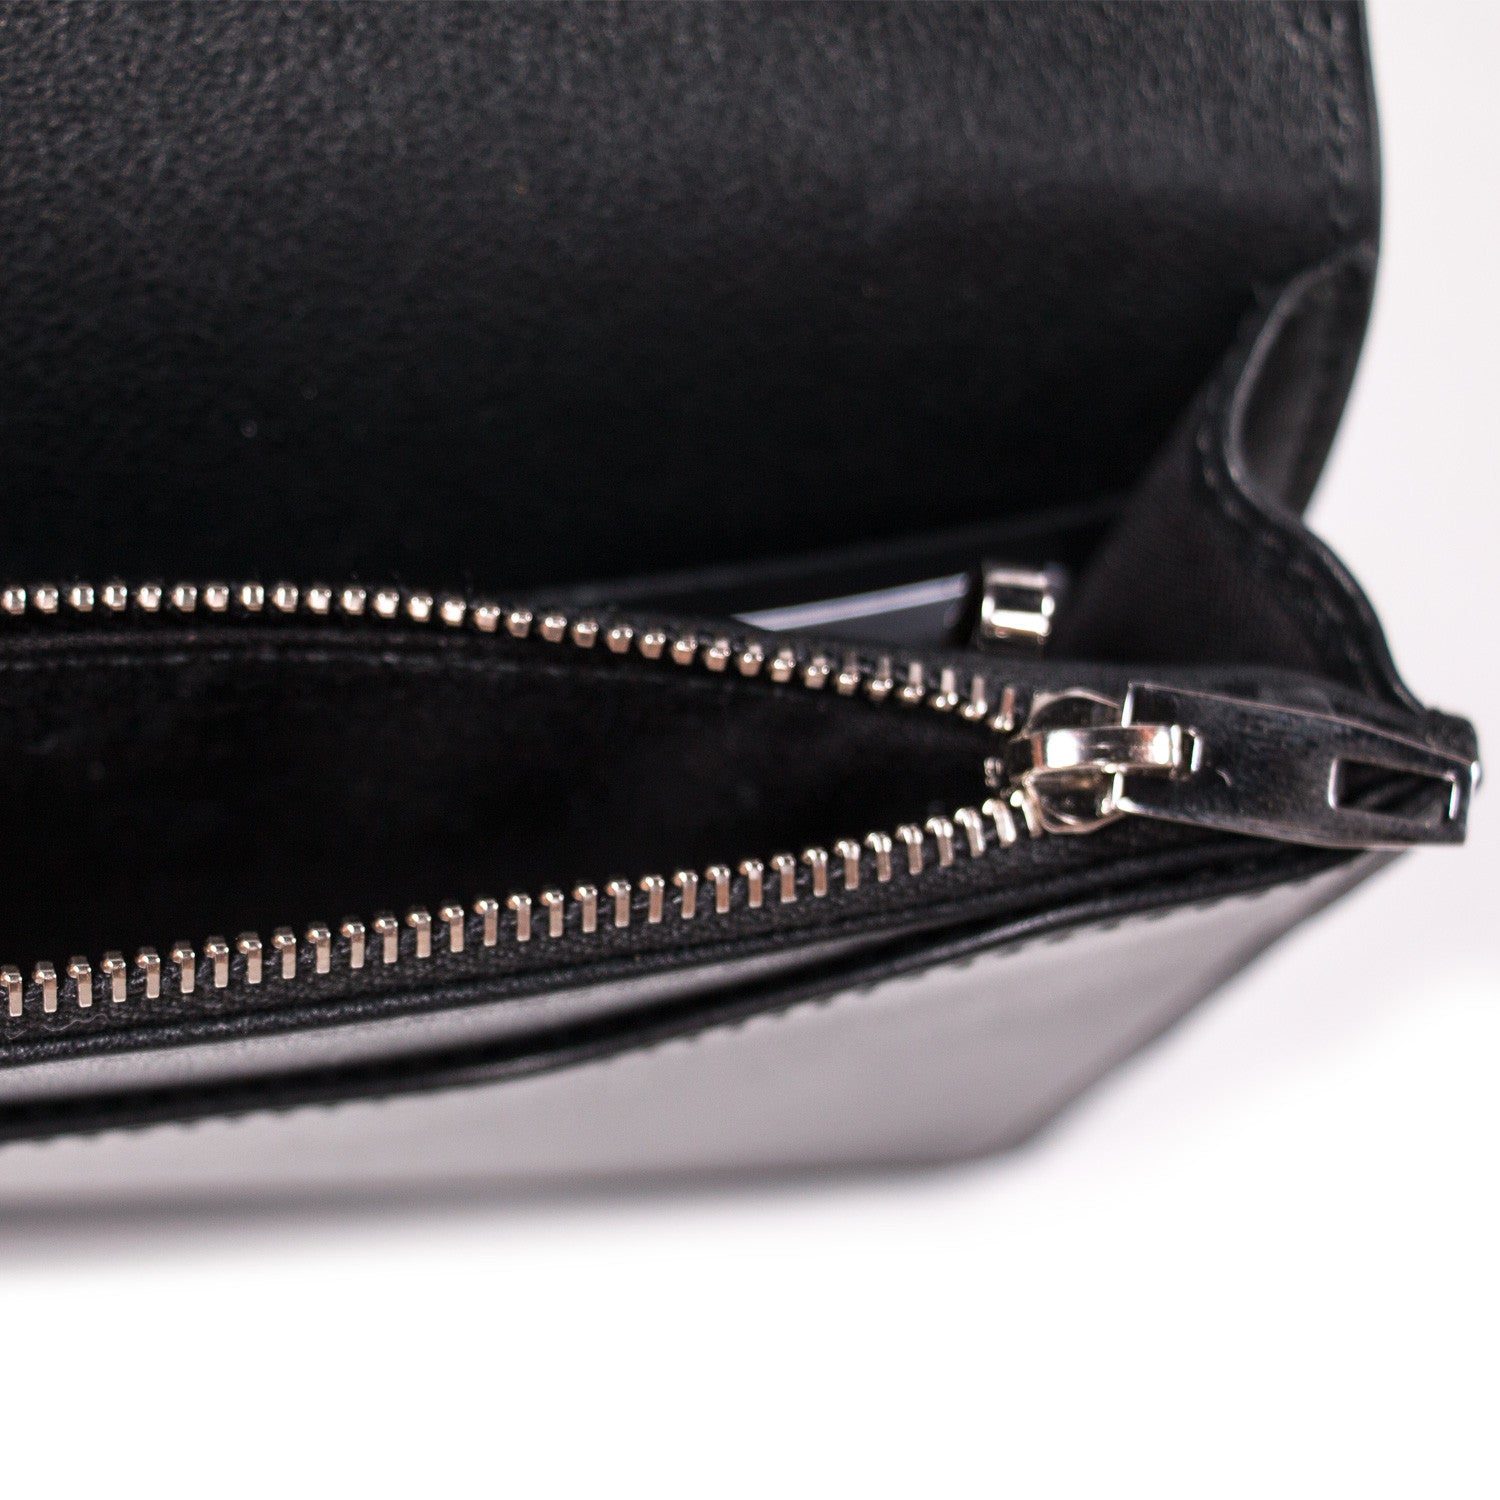 Shop authentic Balenciaga Metal Plate Shoulder Bag at revogue for just ...